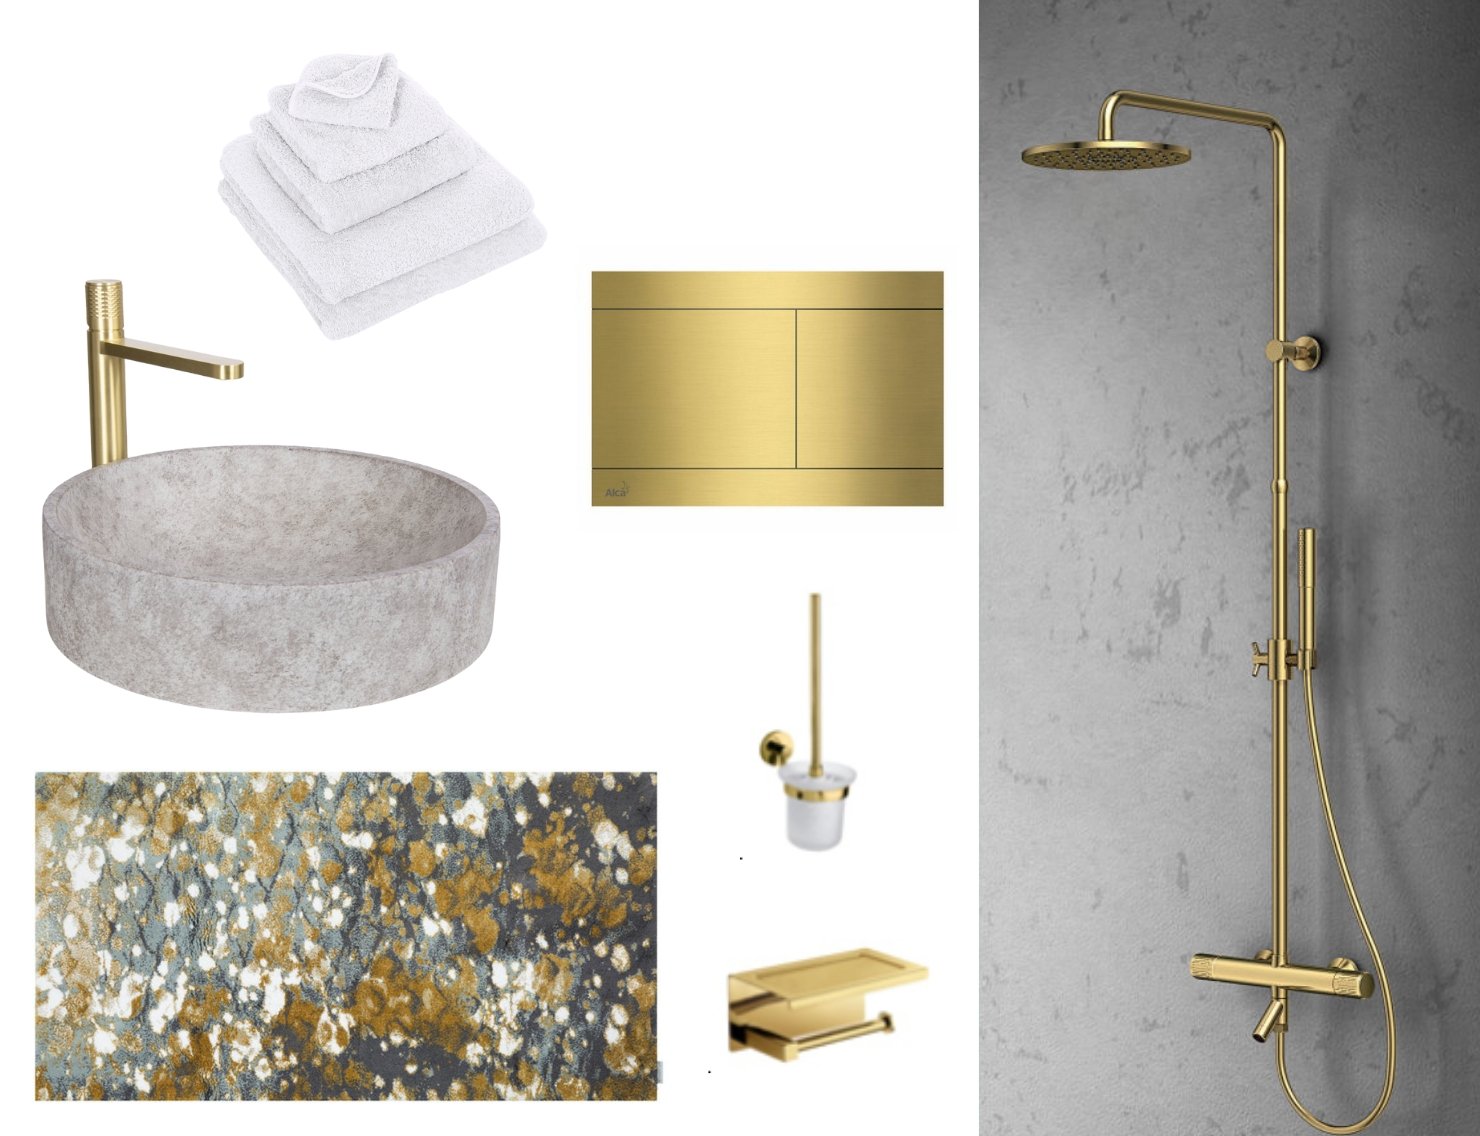 Satin Gold Towel Hook - |VESIMI Design| Luxury and Rustic bathrooms online